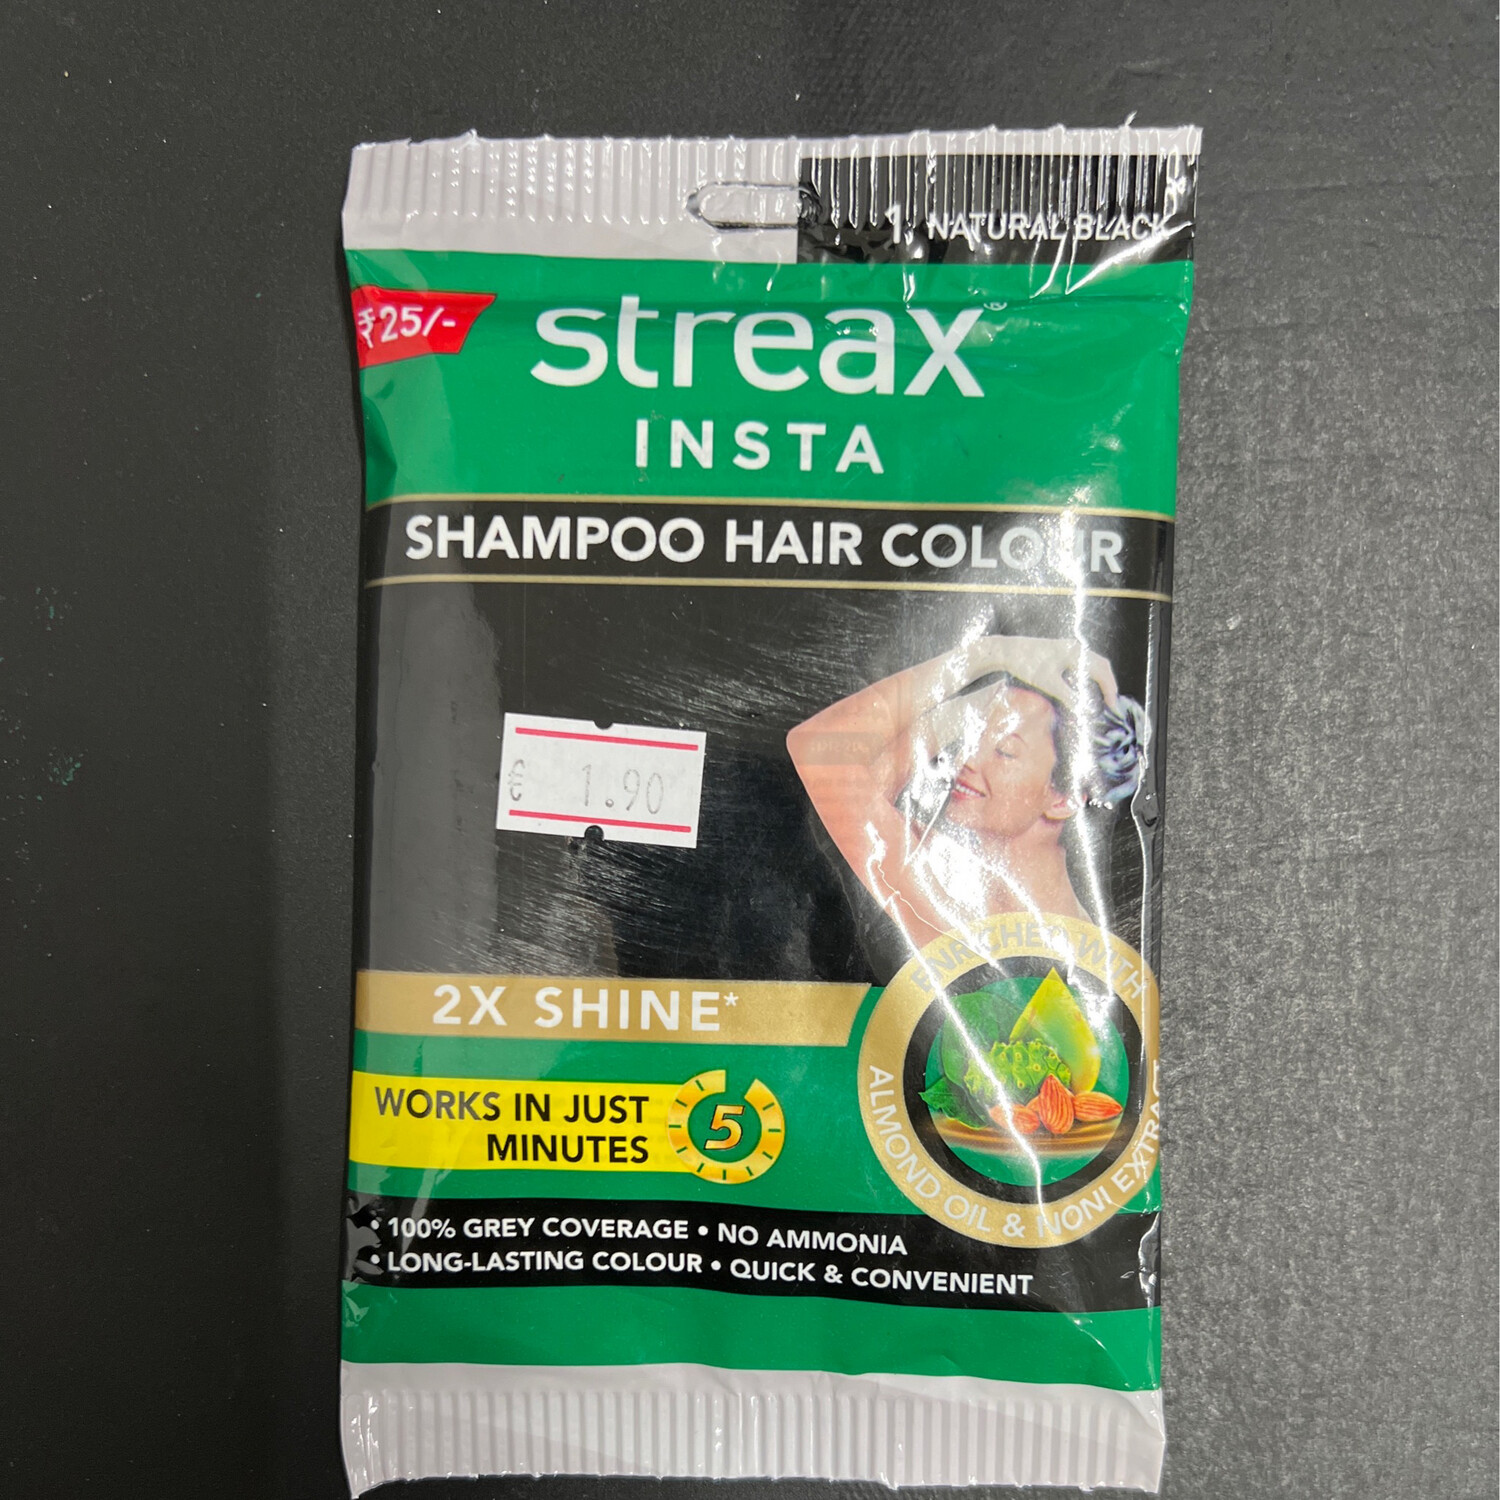 Streax Insta Shampo Hair Color 20g